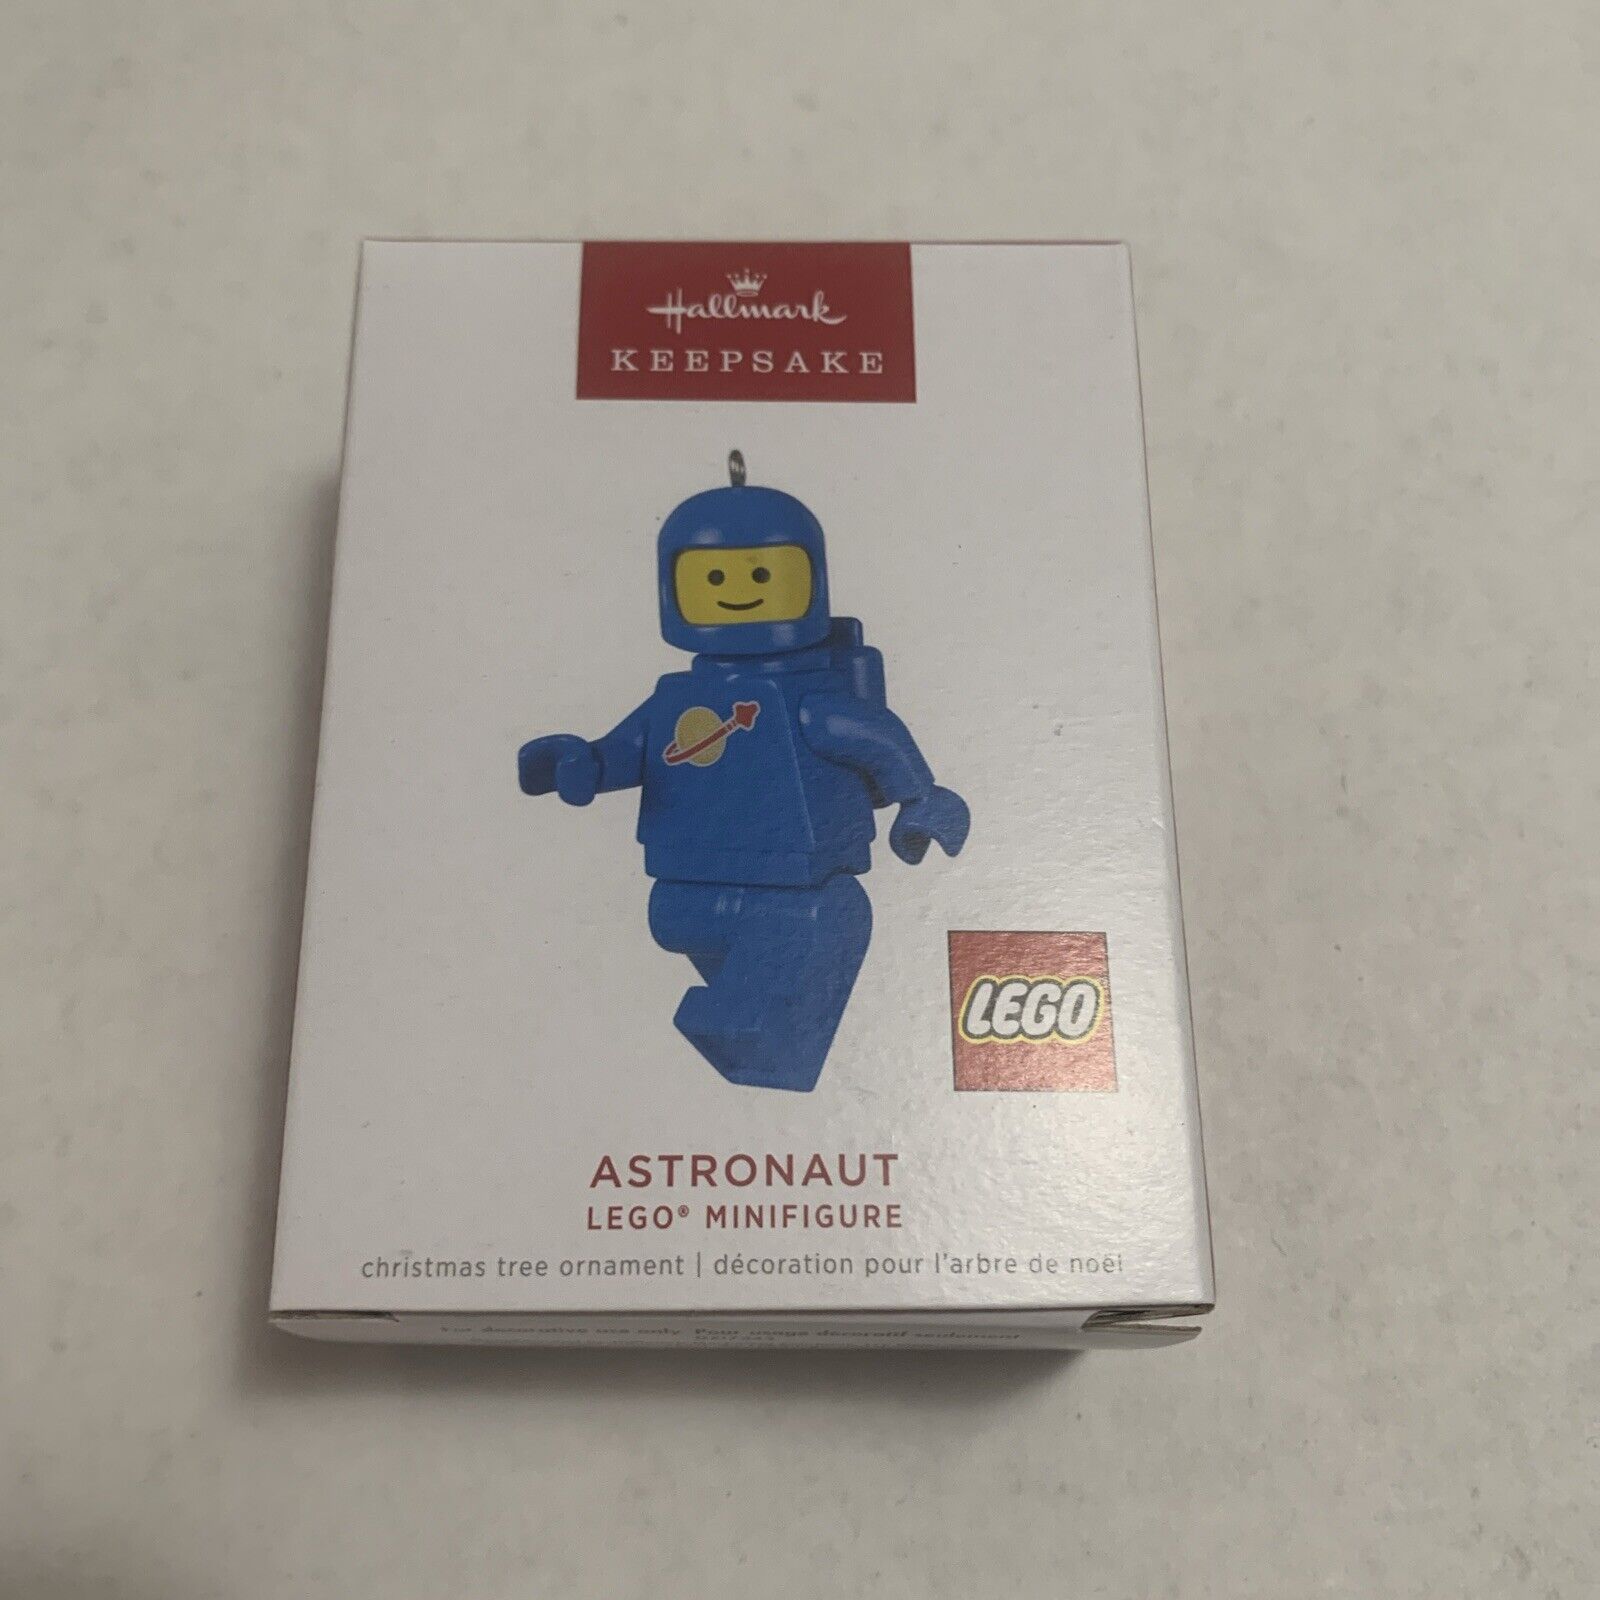 2022 Hallmark Keepsake Ornament Astronaut Lego Minifigure